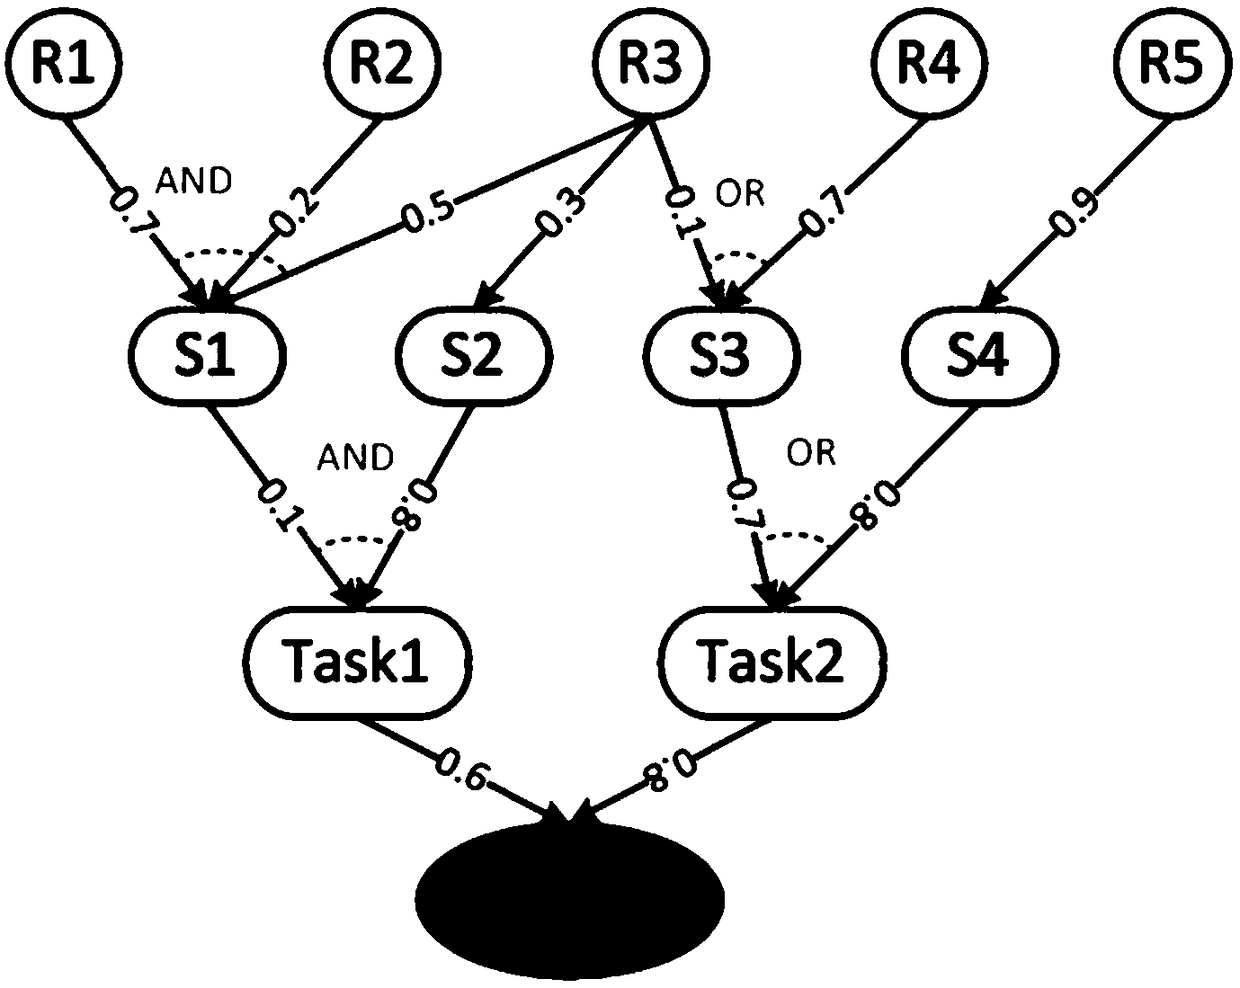 Dynamic task influence estimation method for self-adaptively switching Bayes network